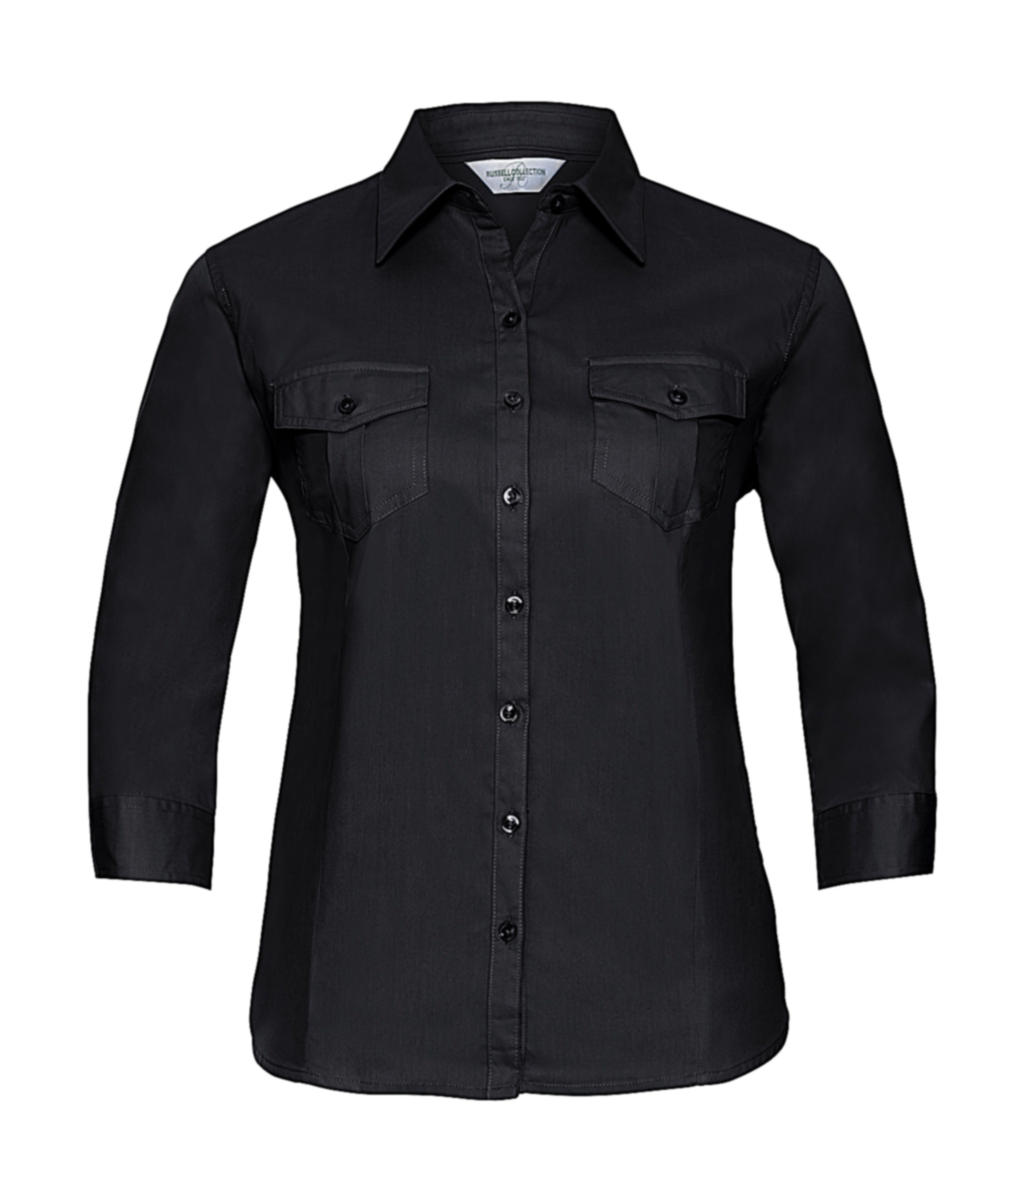  Ladies Roll 3/4 Sleeve Shirt in Farbe Black